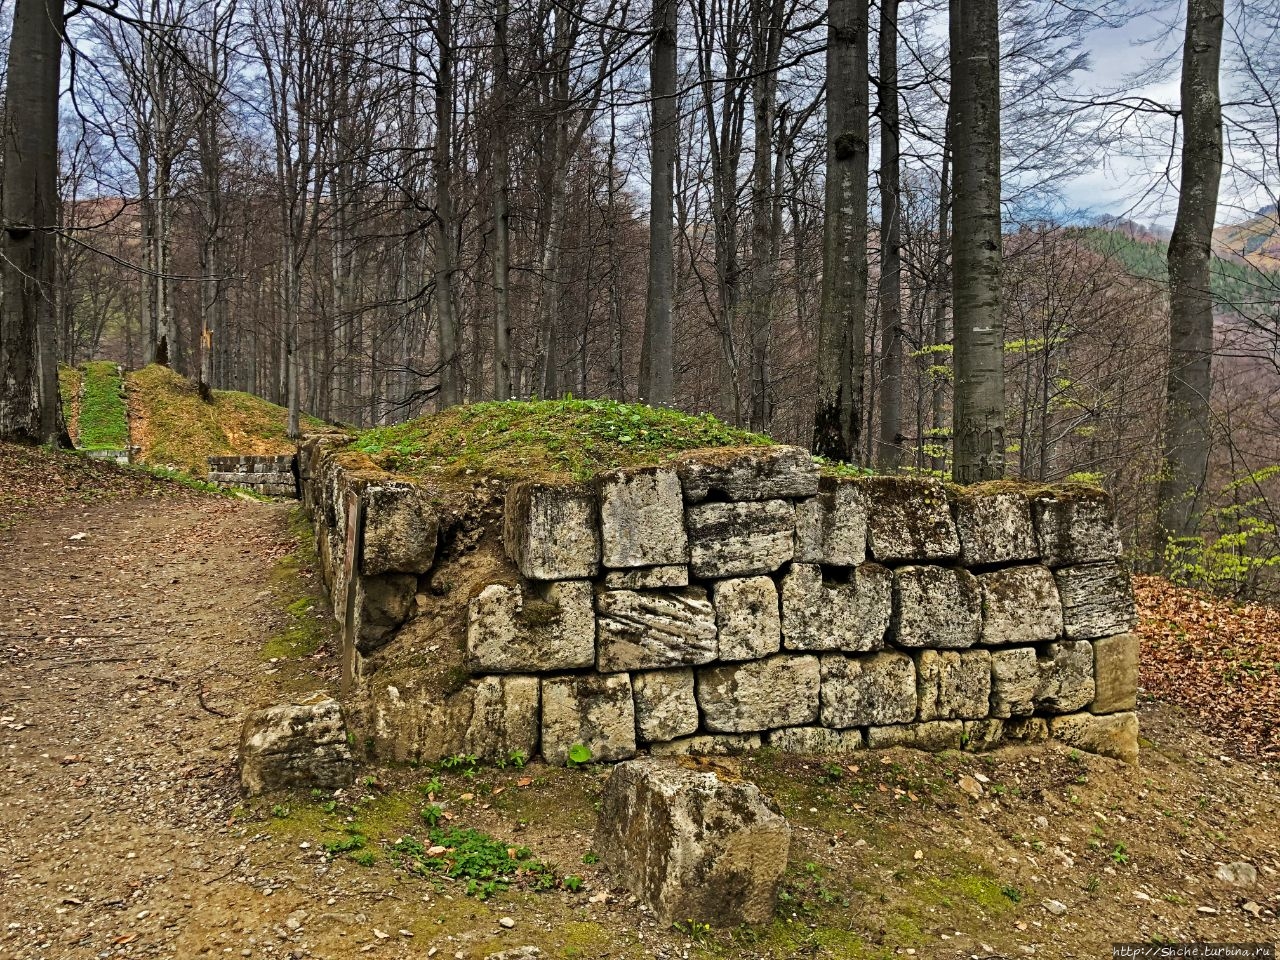 Сармизегетуза (Дакия) Грэдиштя-Мунчелулуй-Чокловина Природный Парк, Румыния